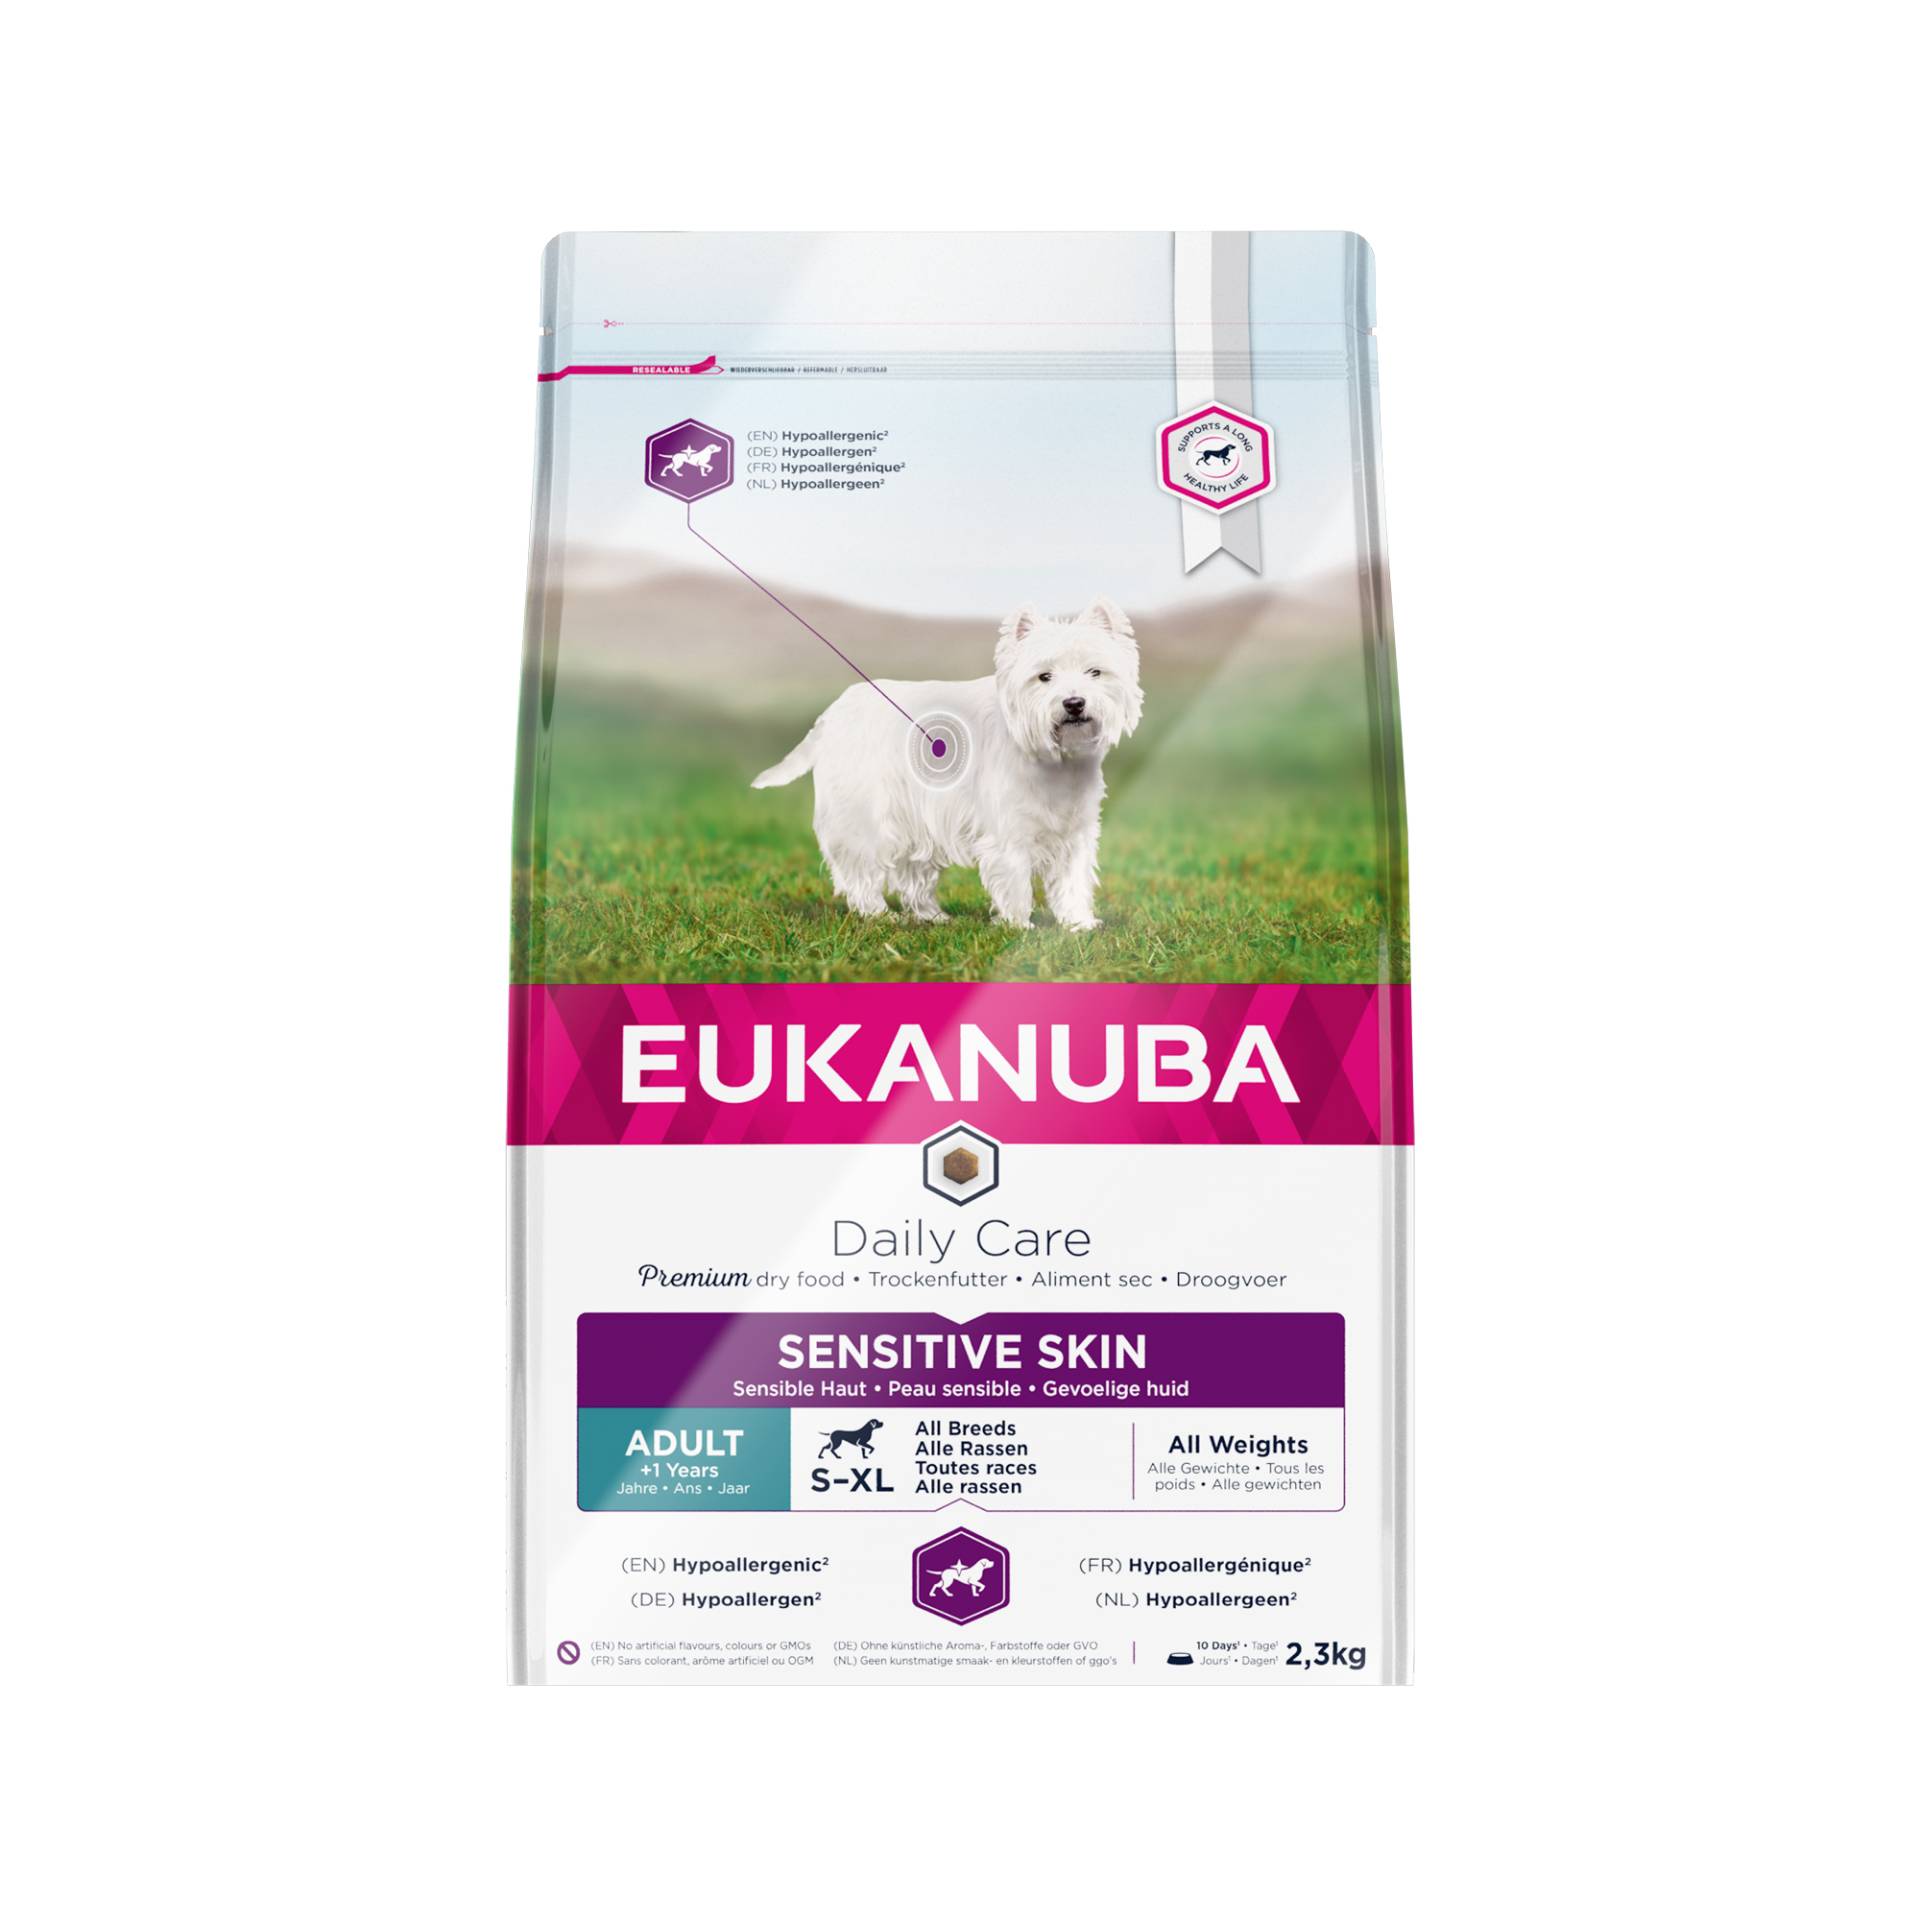 Eukanuba Sensitive Skin - Daily Care - Hund - 2 x 12 kg von Eukanuba